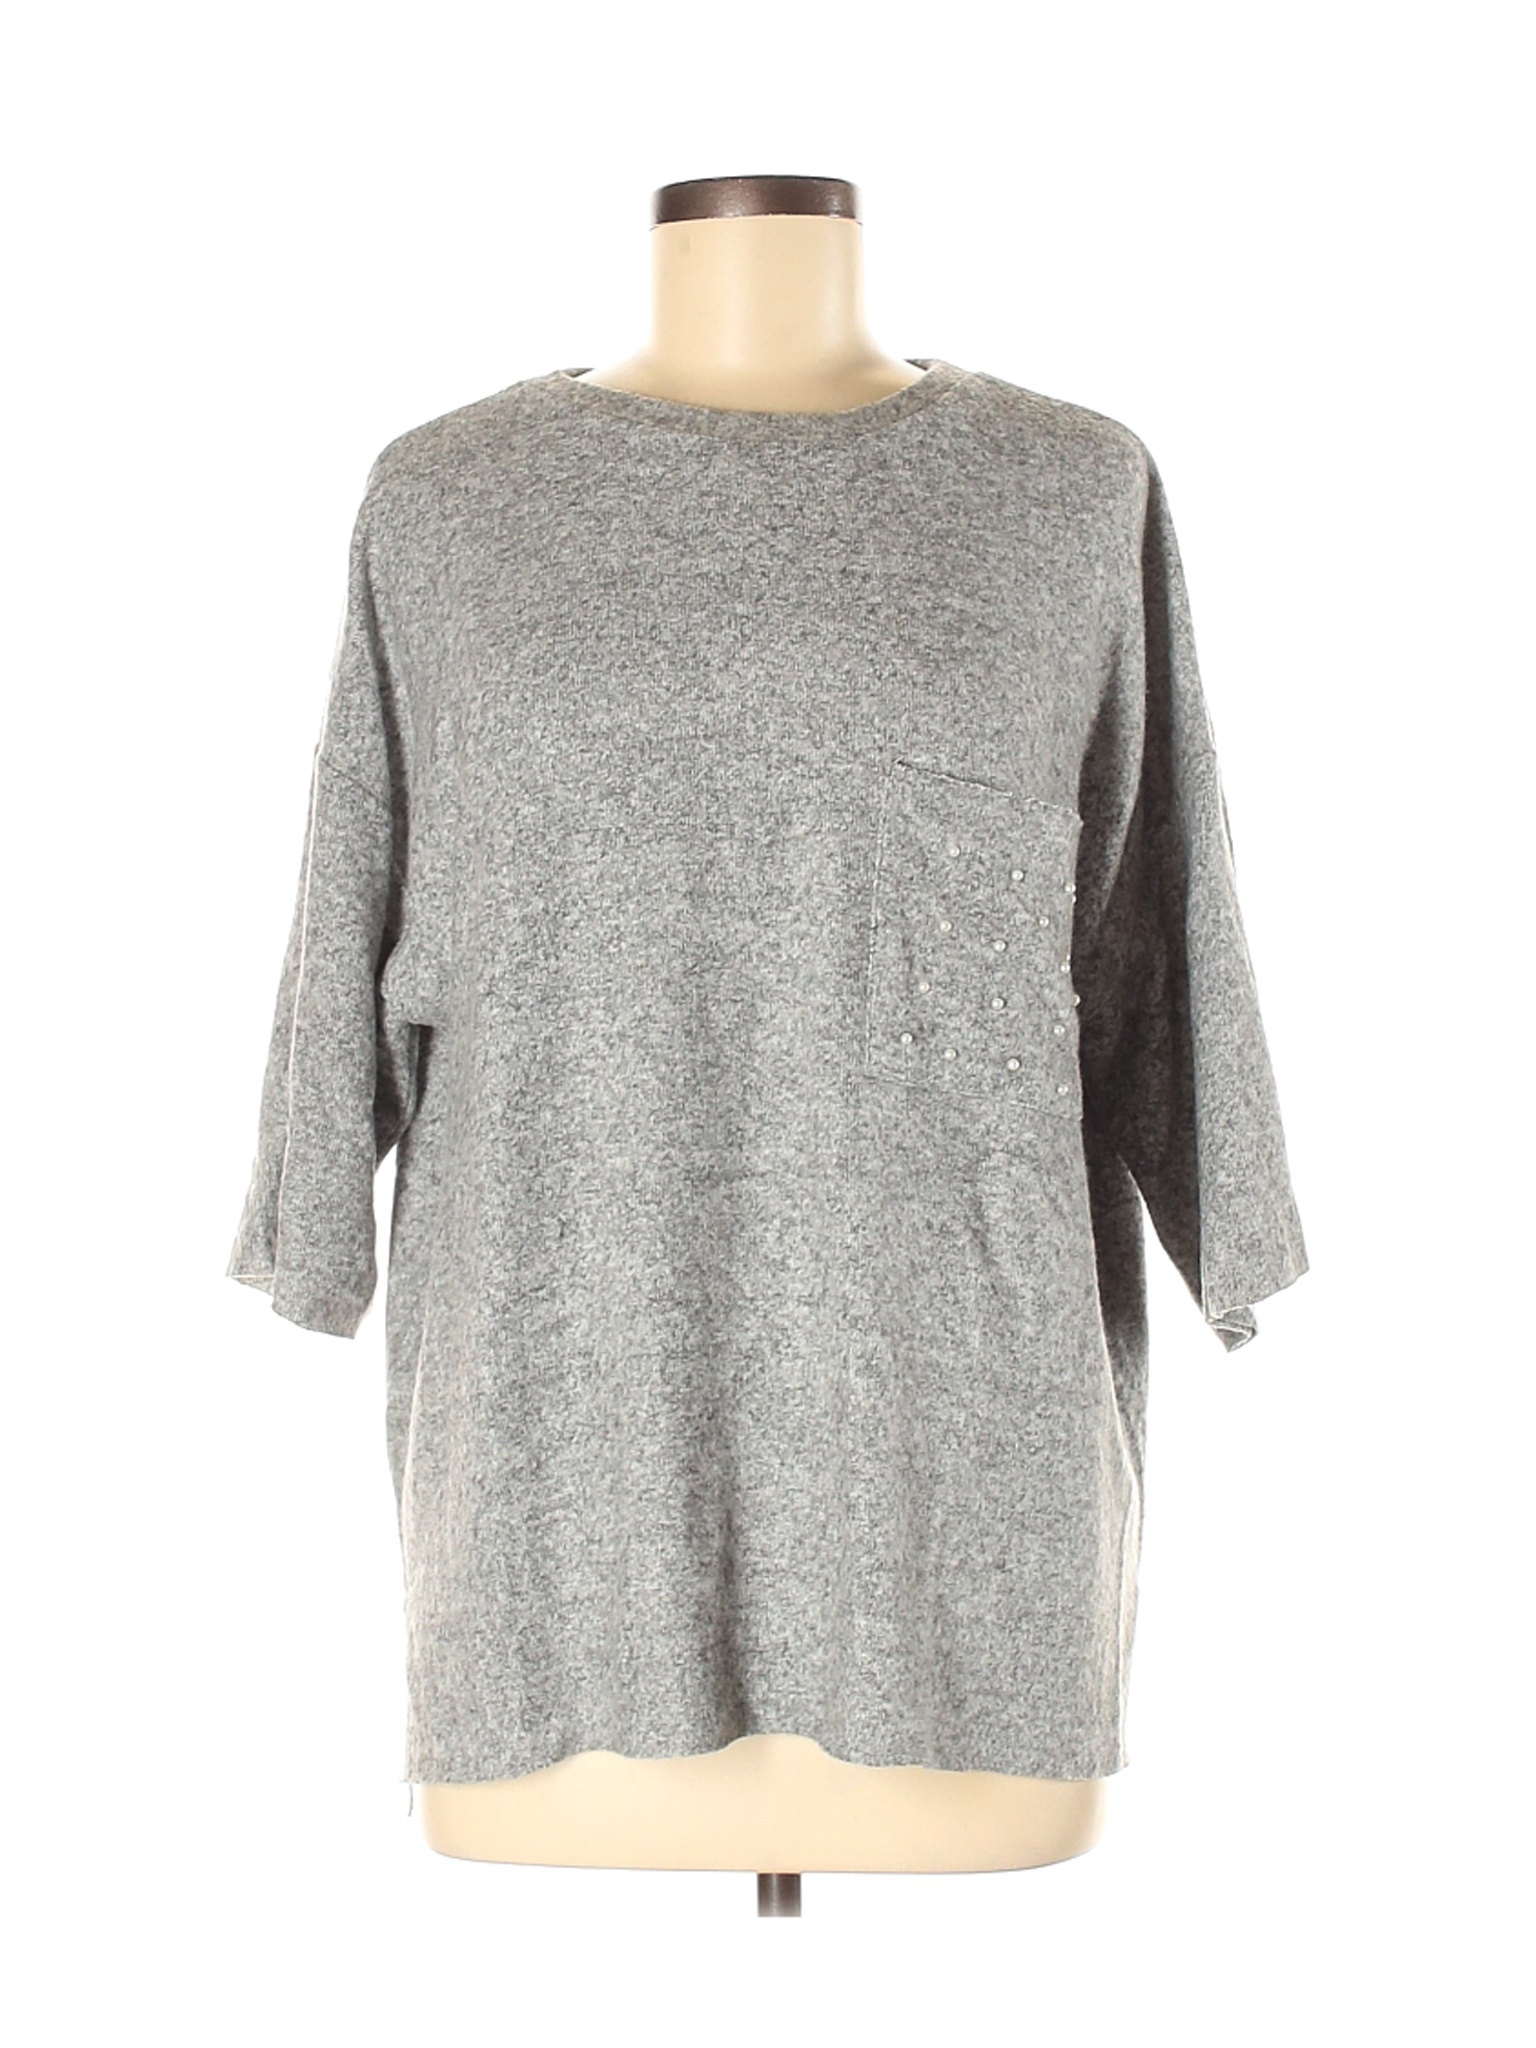 Trafaluc by Zara Women Gray Pullover Sweater M | eBay